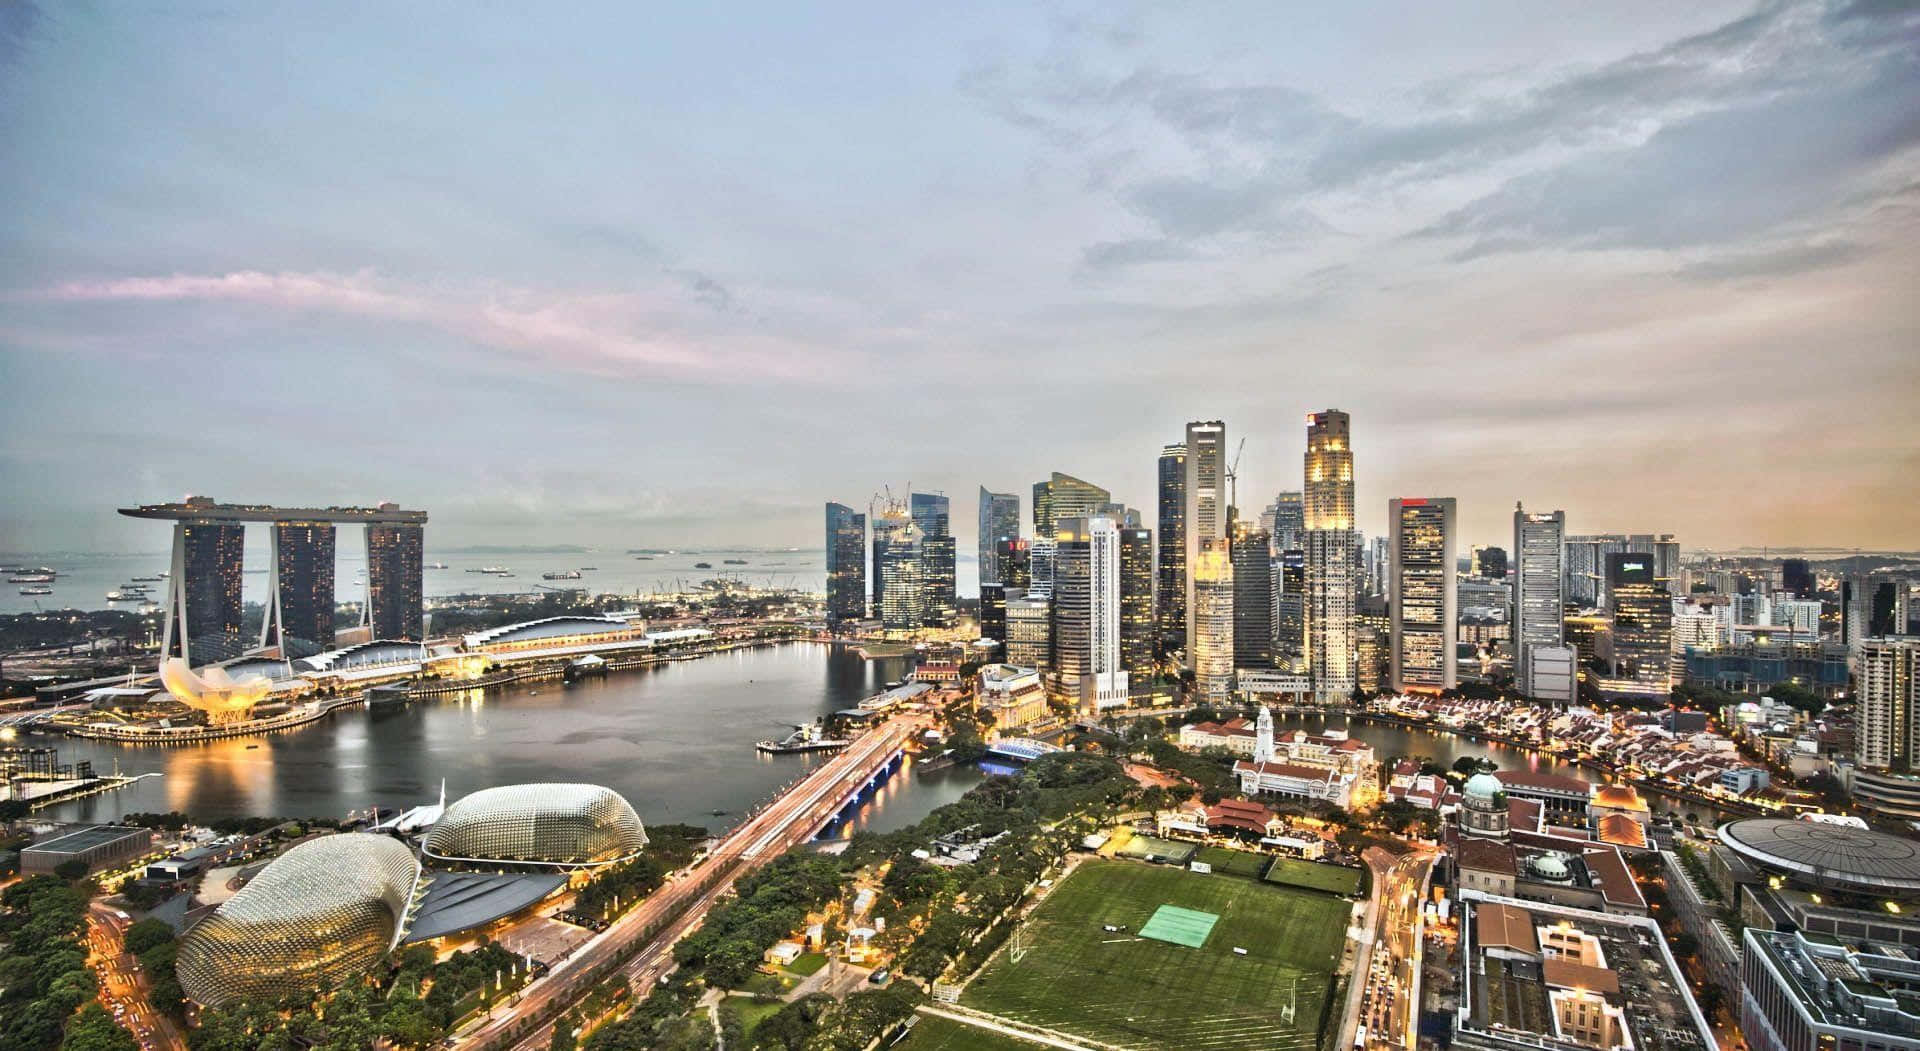 The Splendid View of Singapore